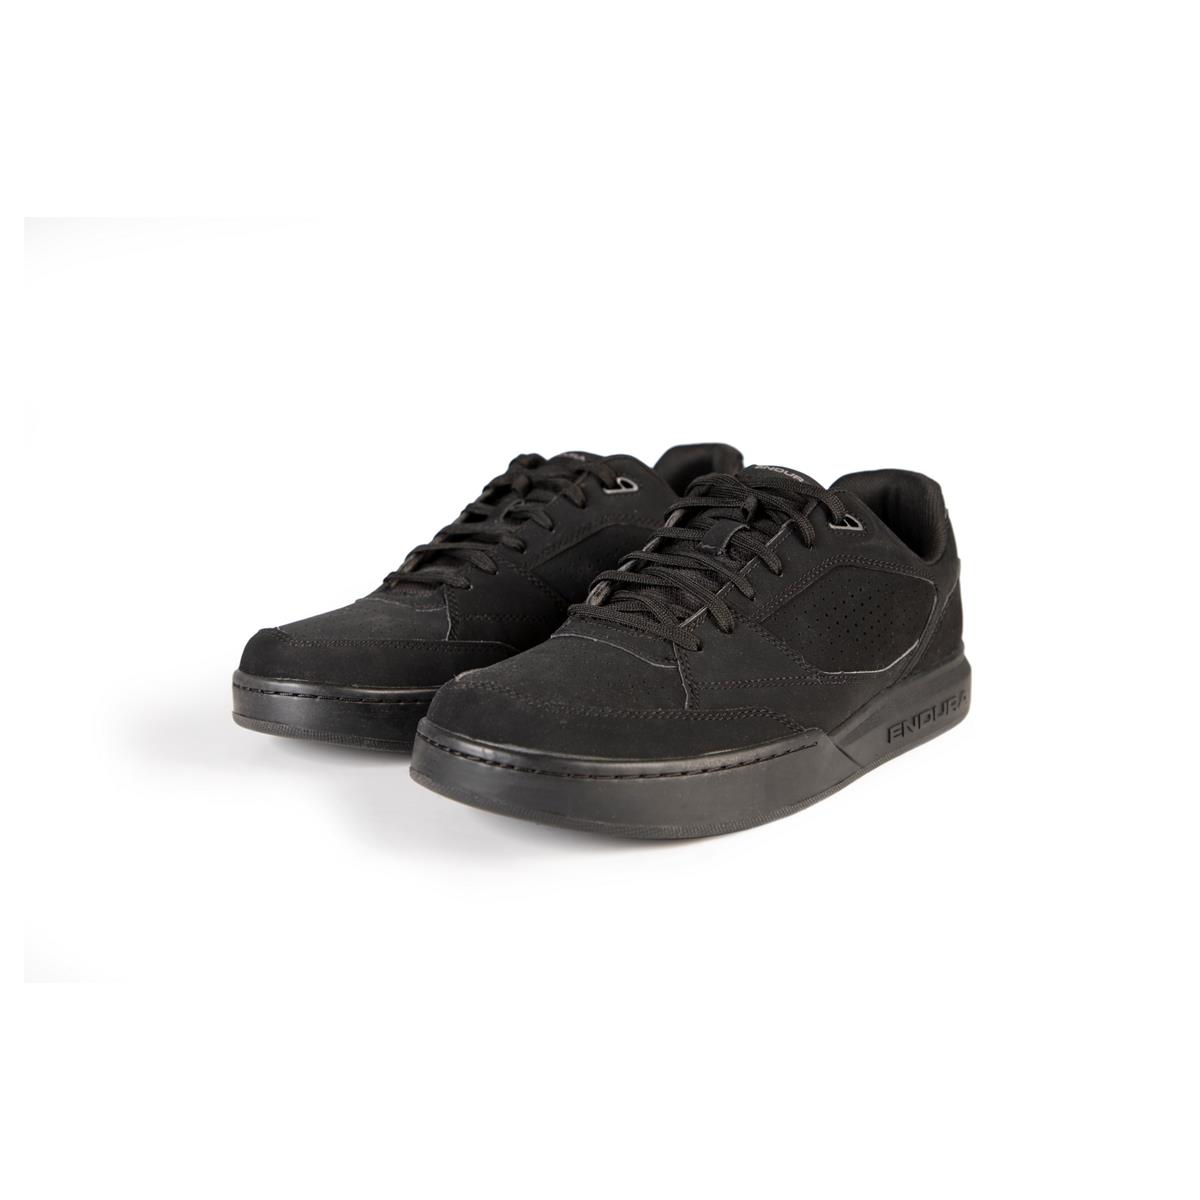 Hummvee Flat Pedal Shoes Black Size 43